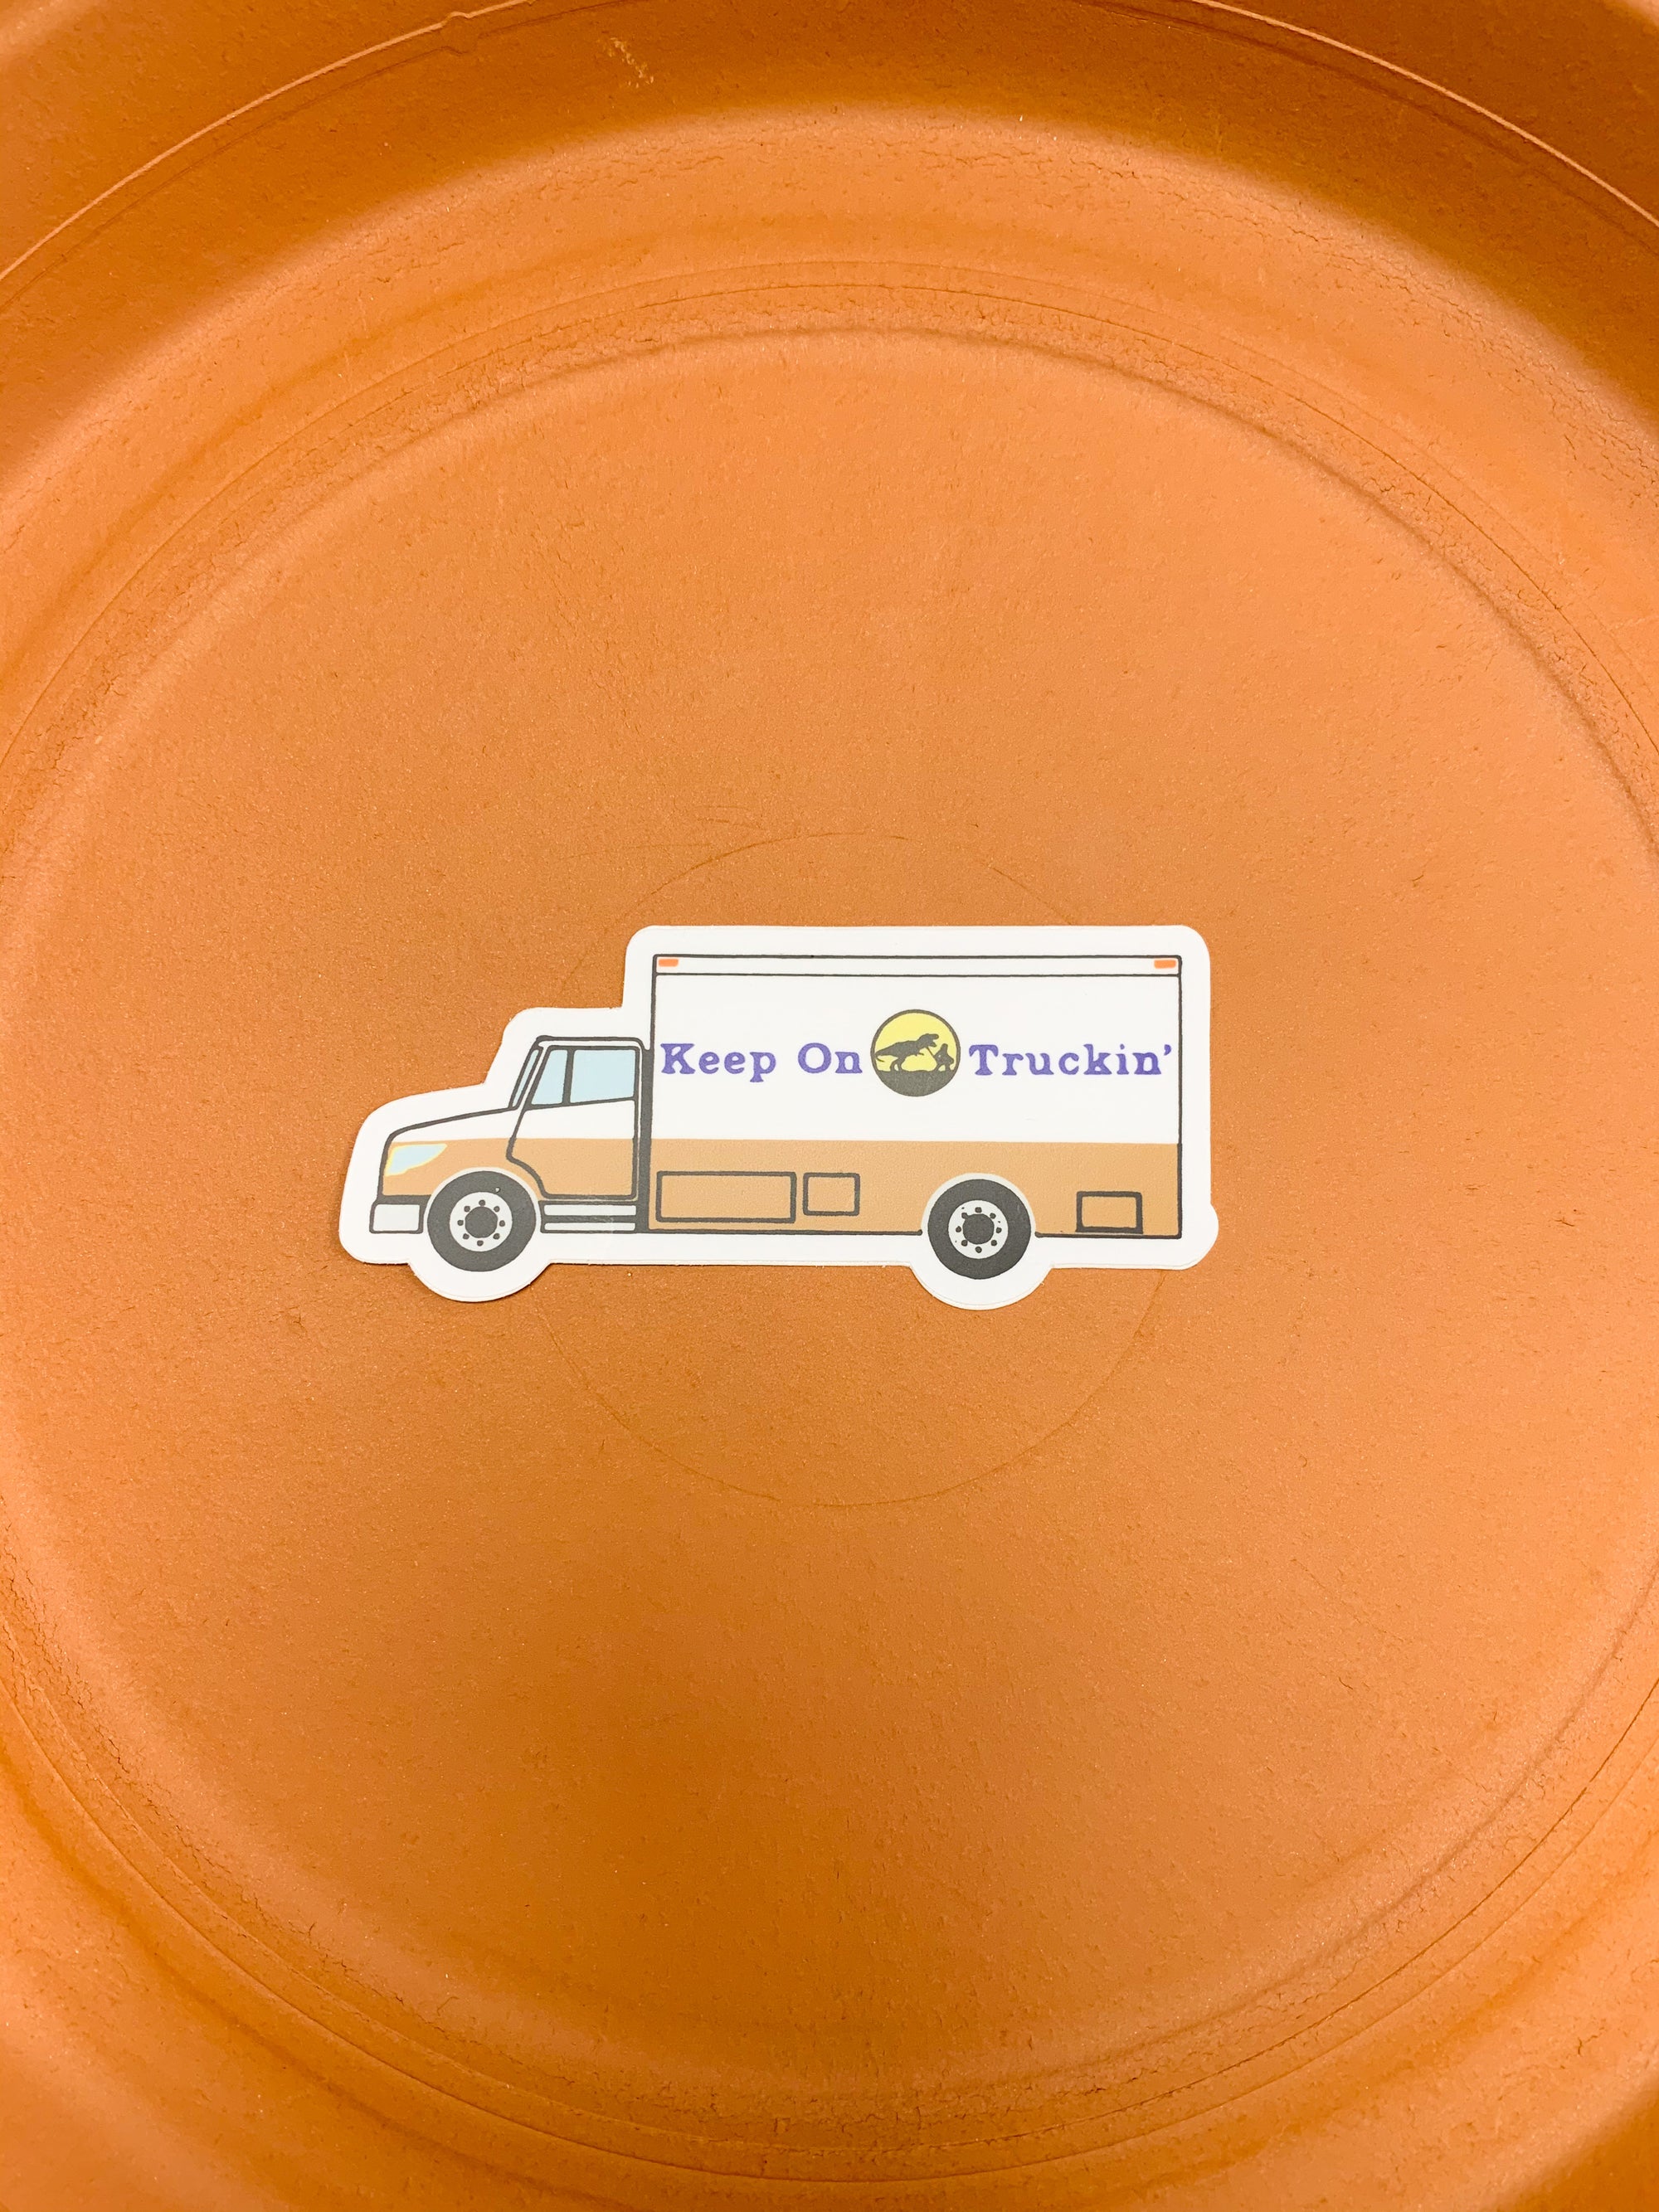 Keep on Truckin’ Sticker